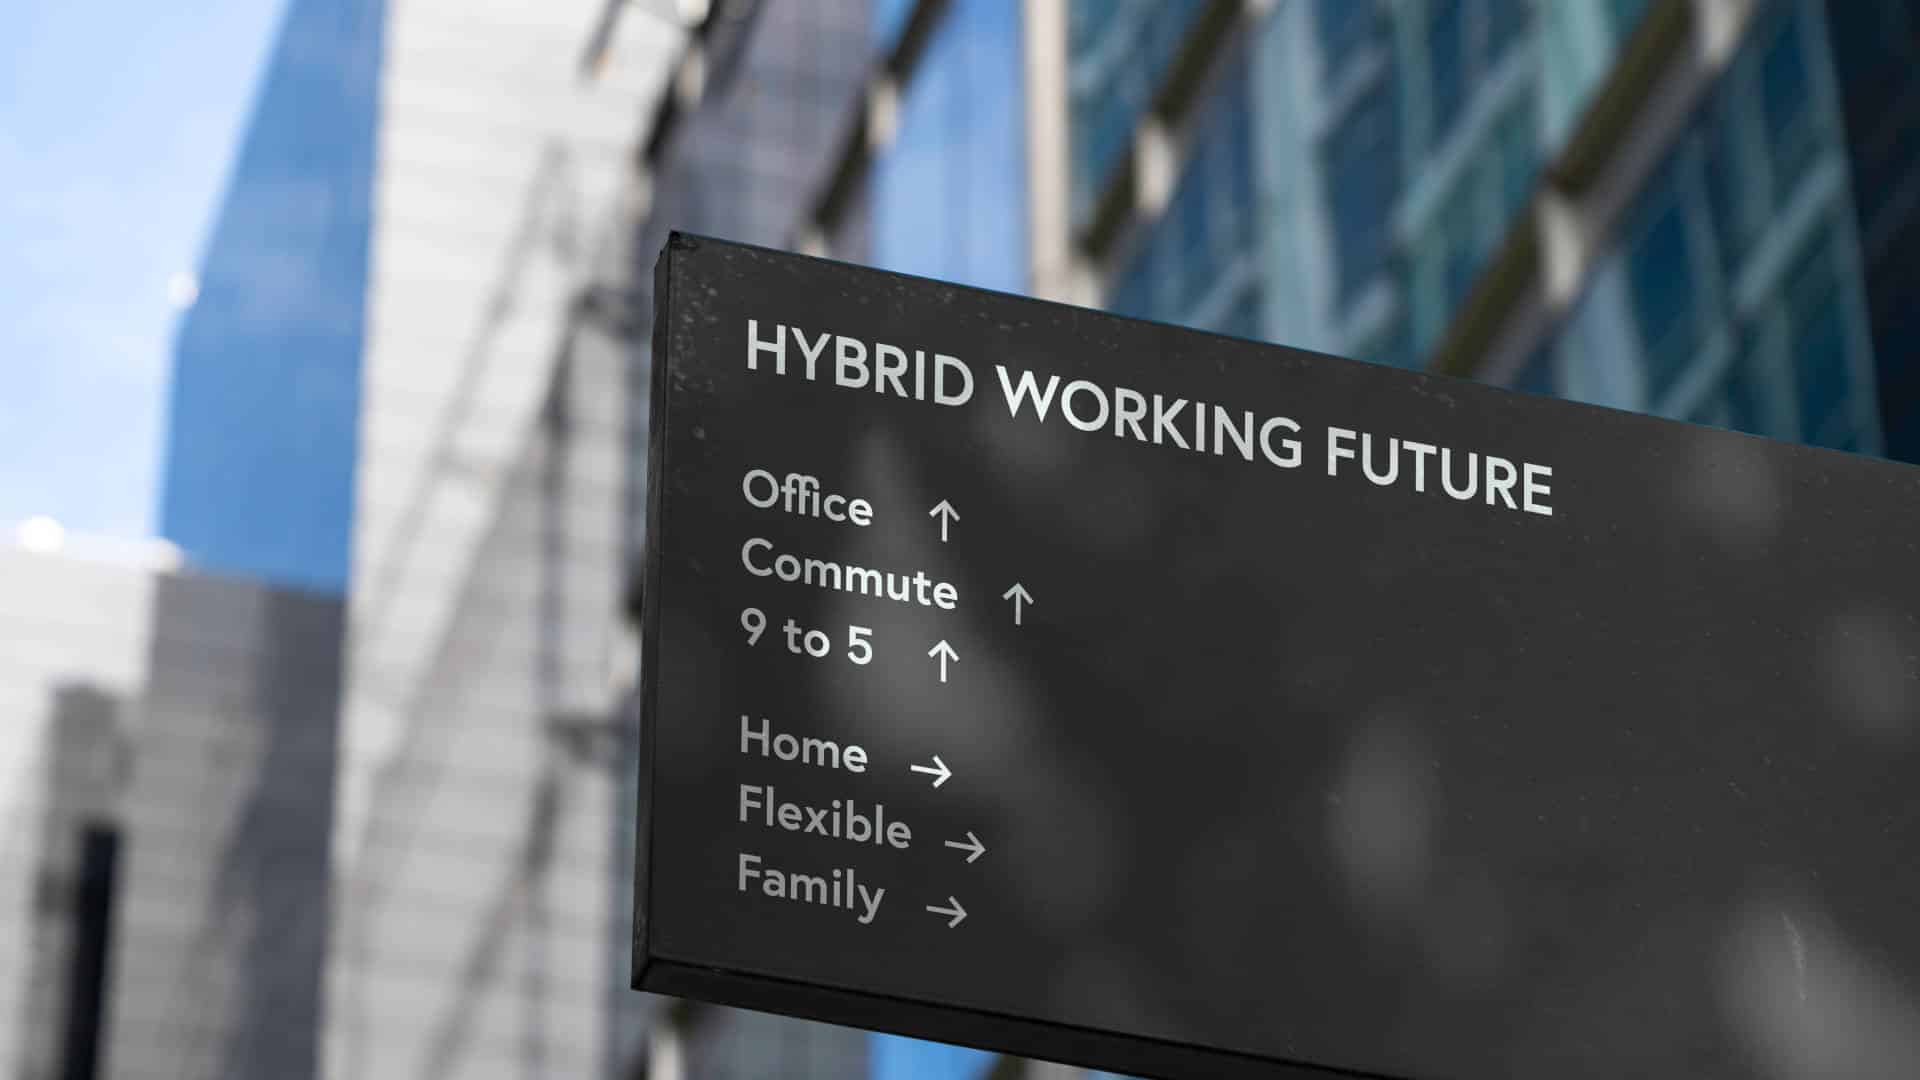 How can we make hybrid working work?